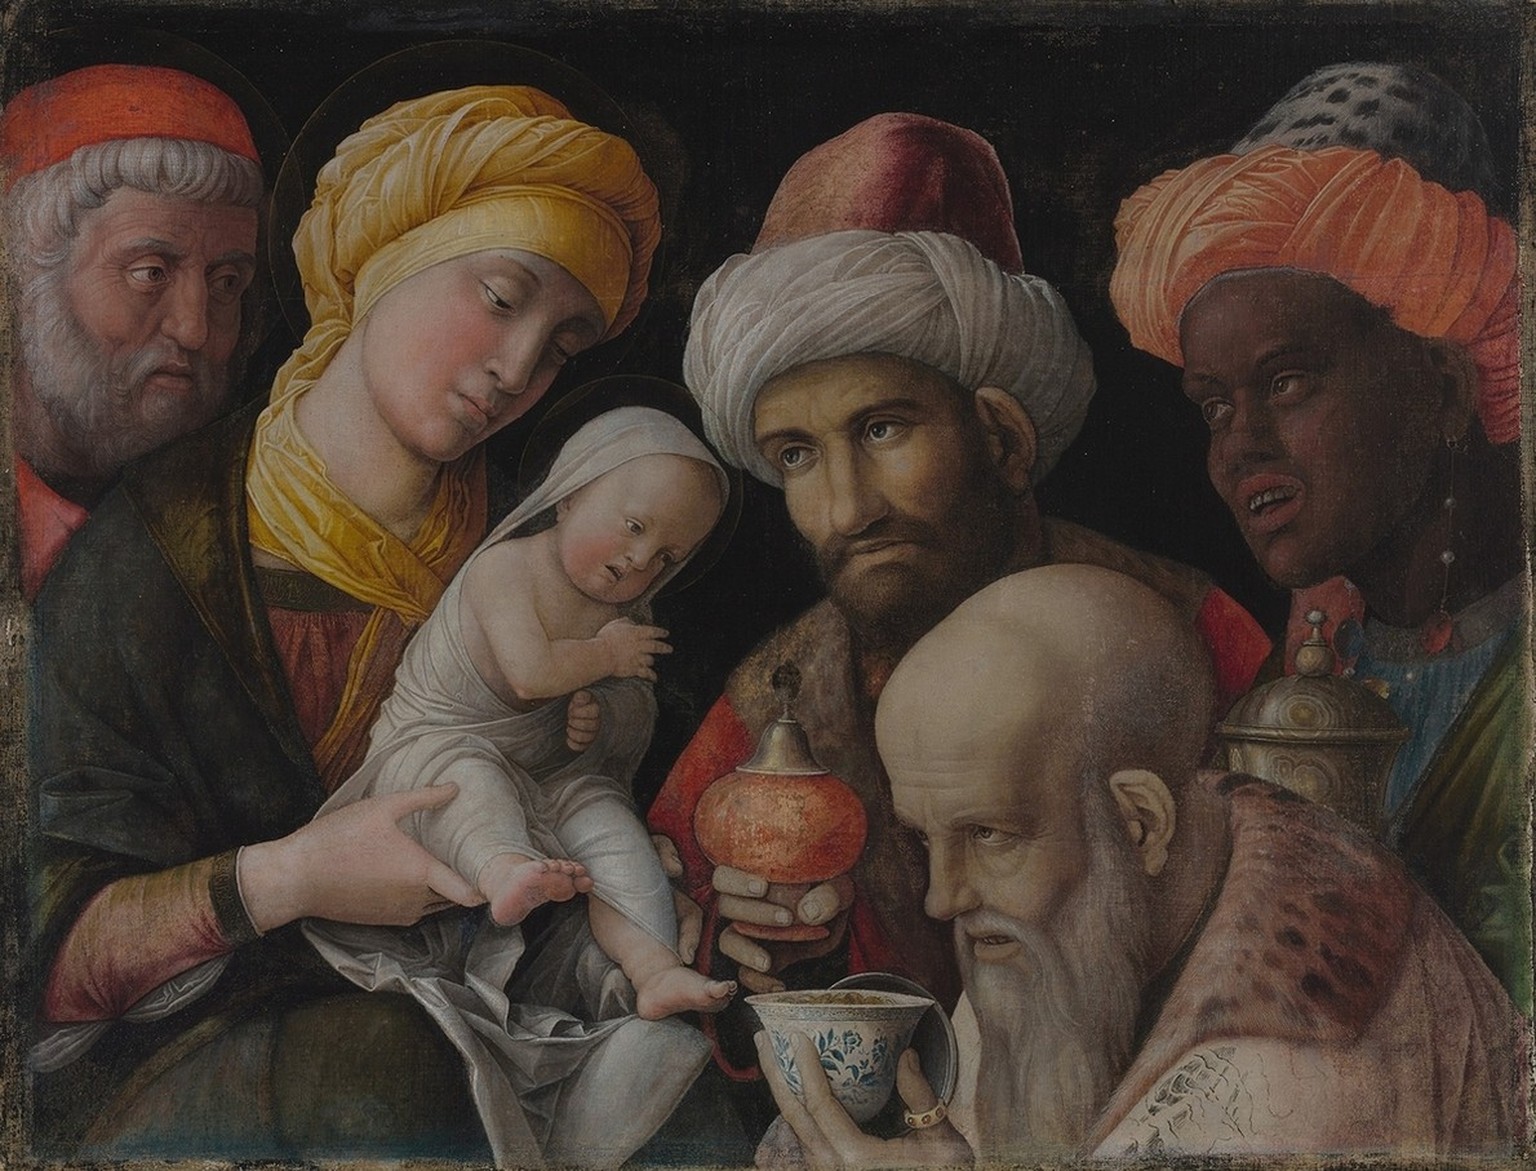 L’Adoration des mages d’Andrea Mantegna, vers 1495-1505.
https://commons.wikimedia.org/wiki/File:Mantegna_Magi.jpg